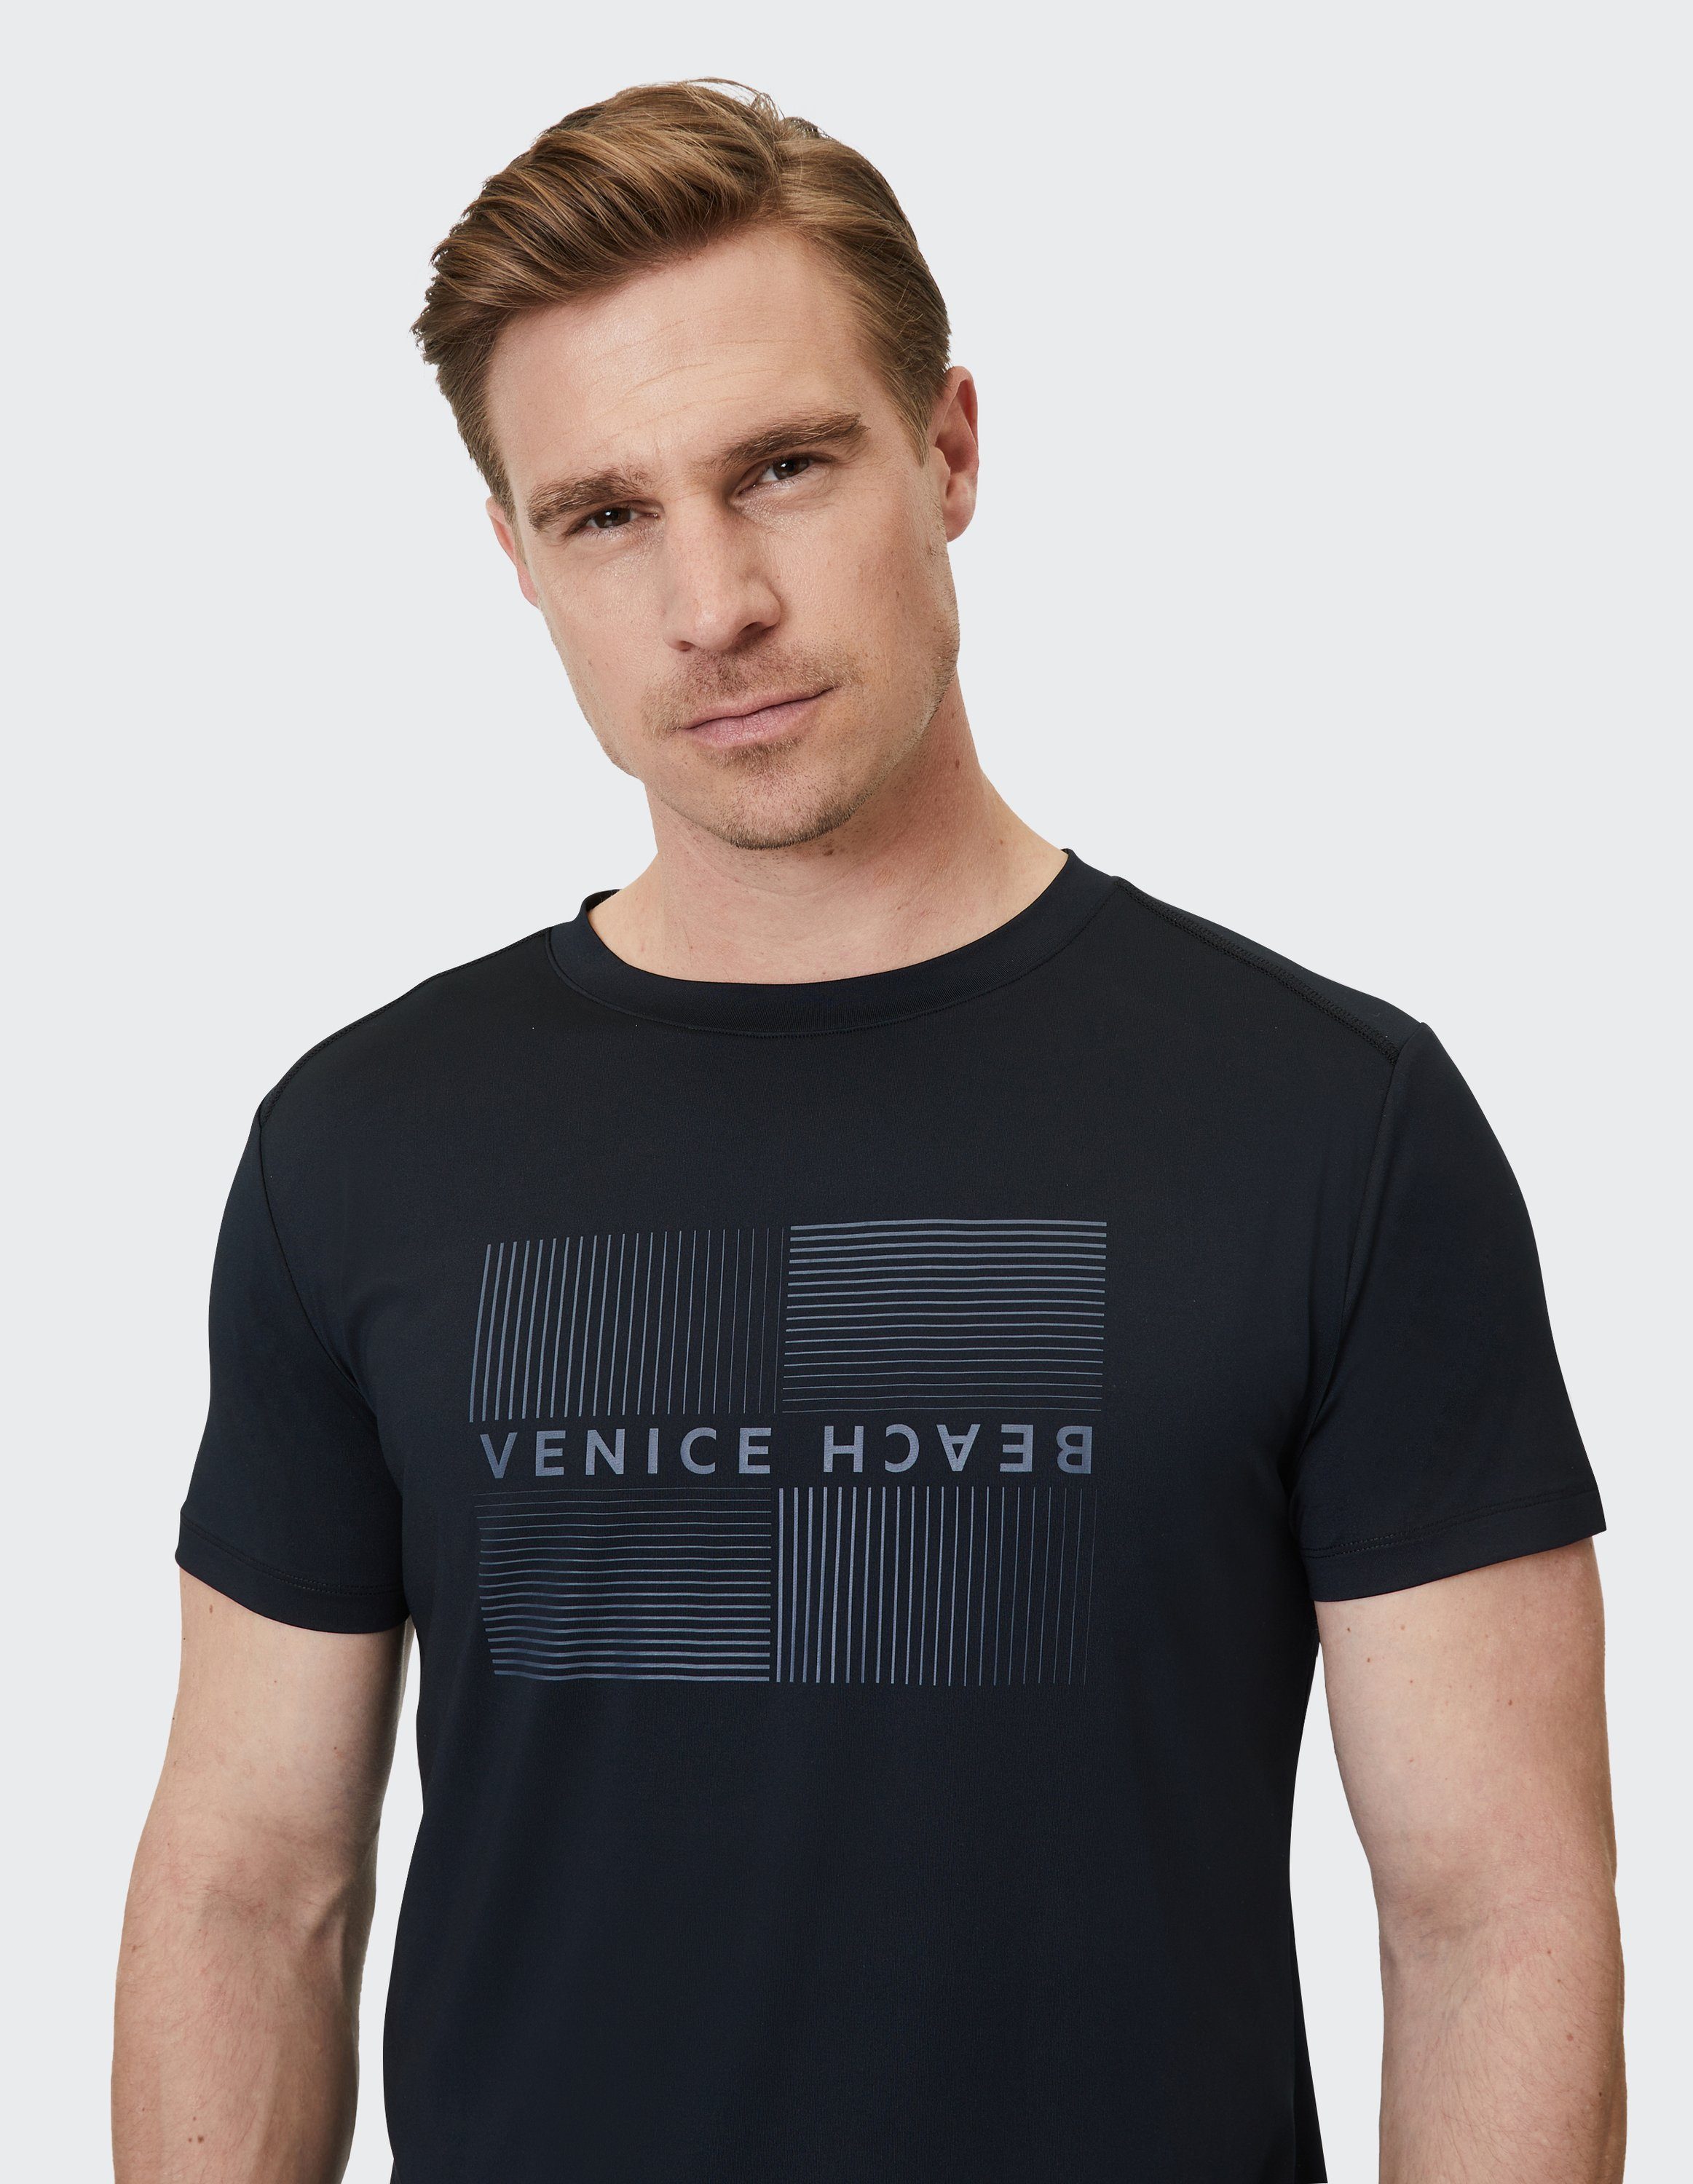 VBM T-Shirt Venice Hayes black T-Shirt Beach